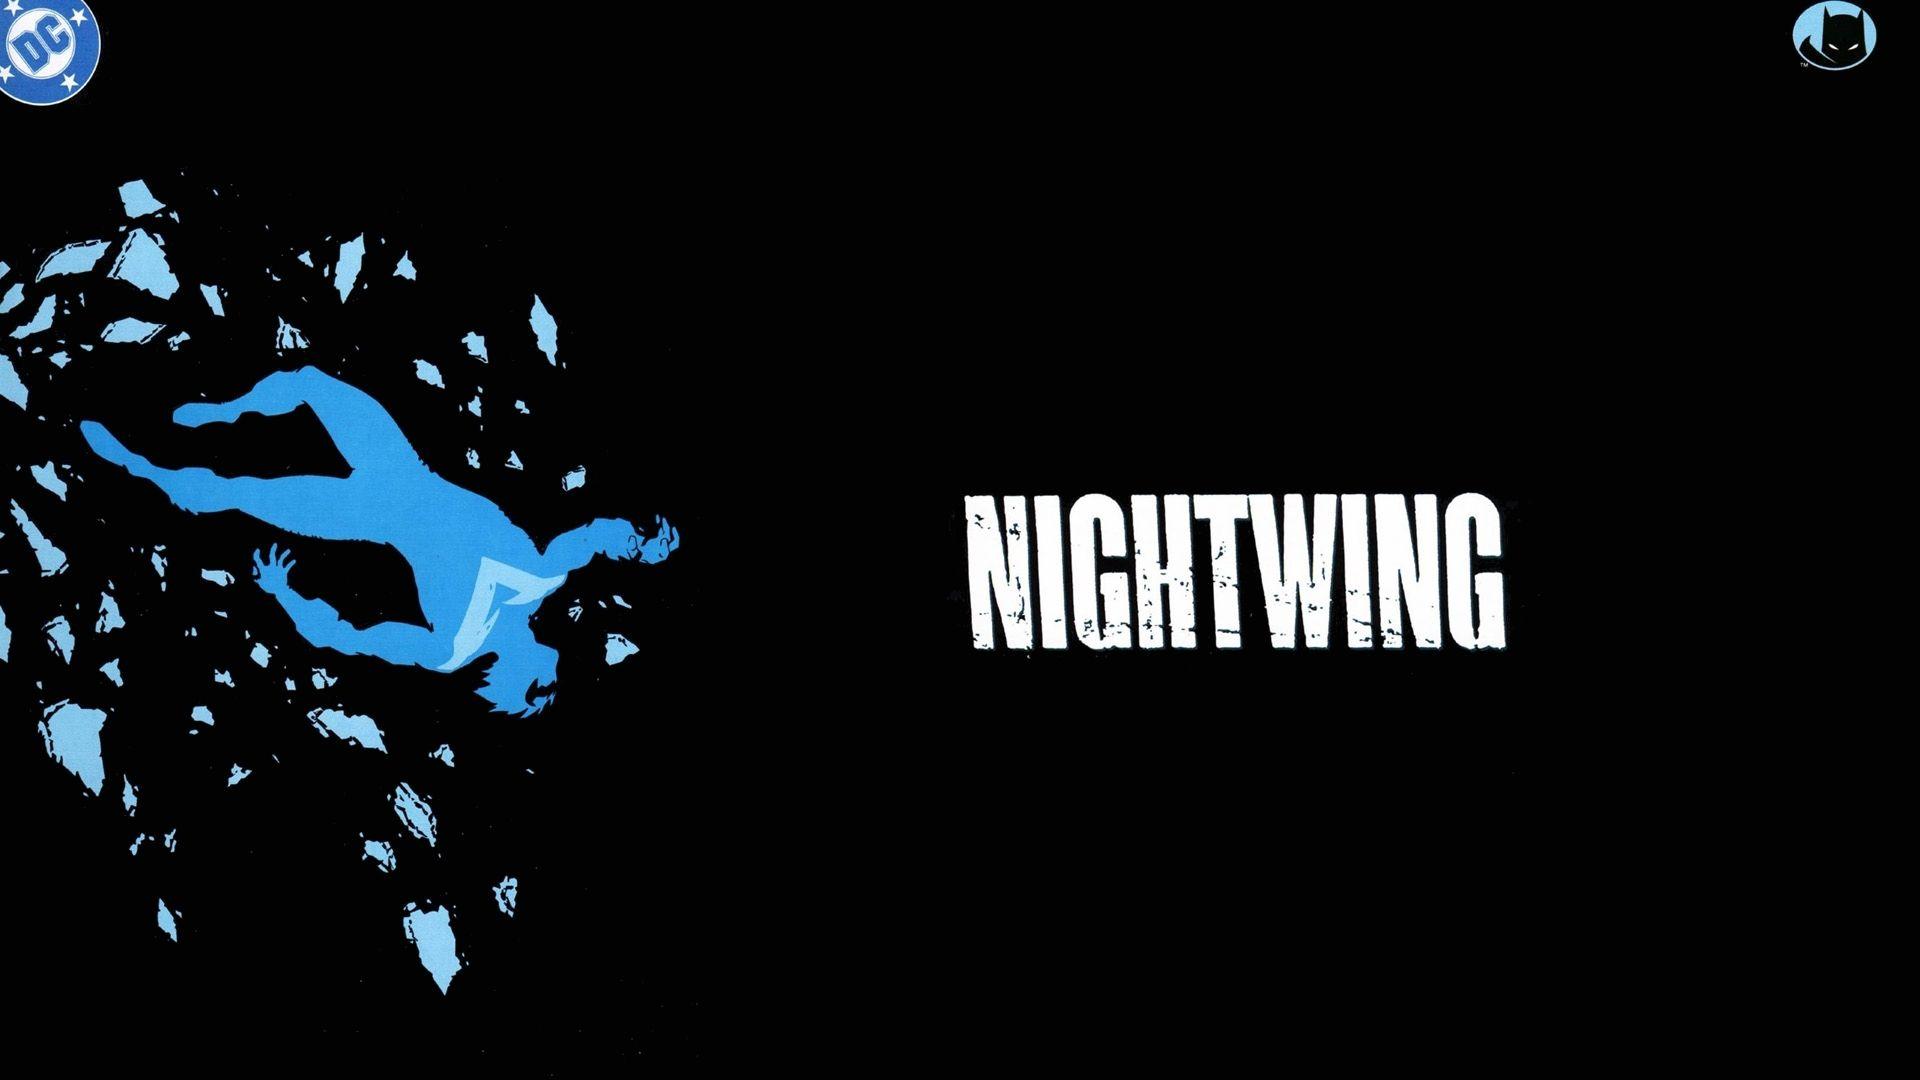 Nightwing Wallpaper HD